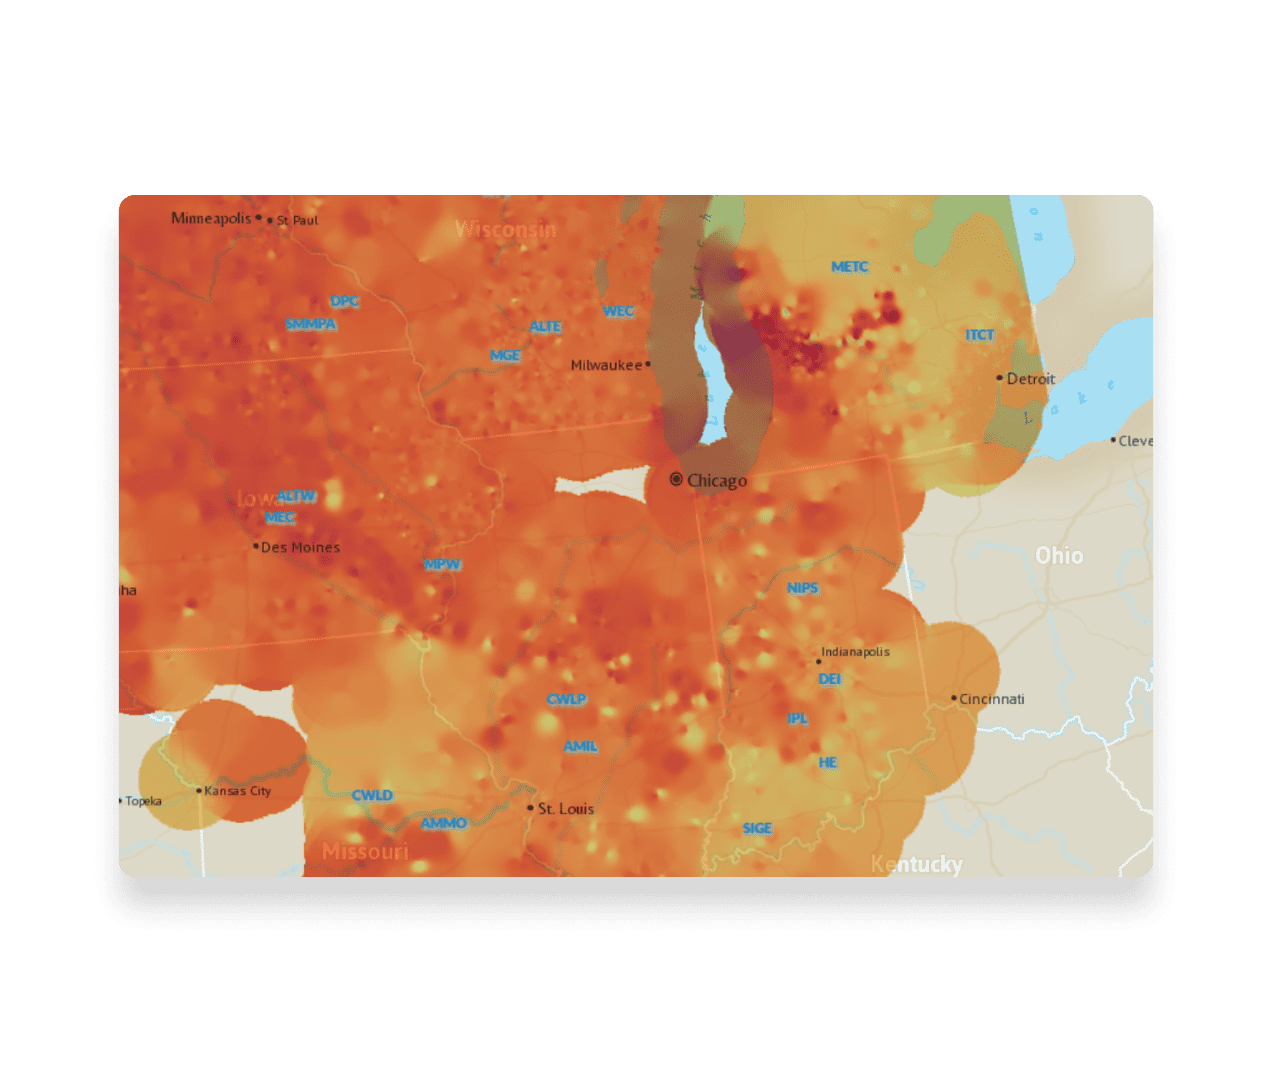 heat map